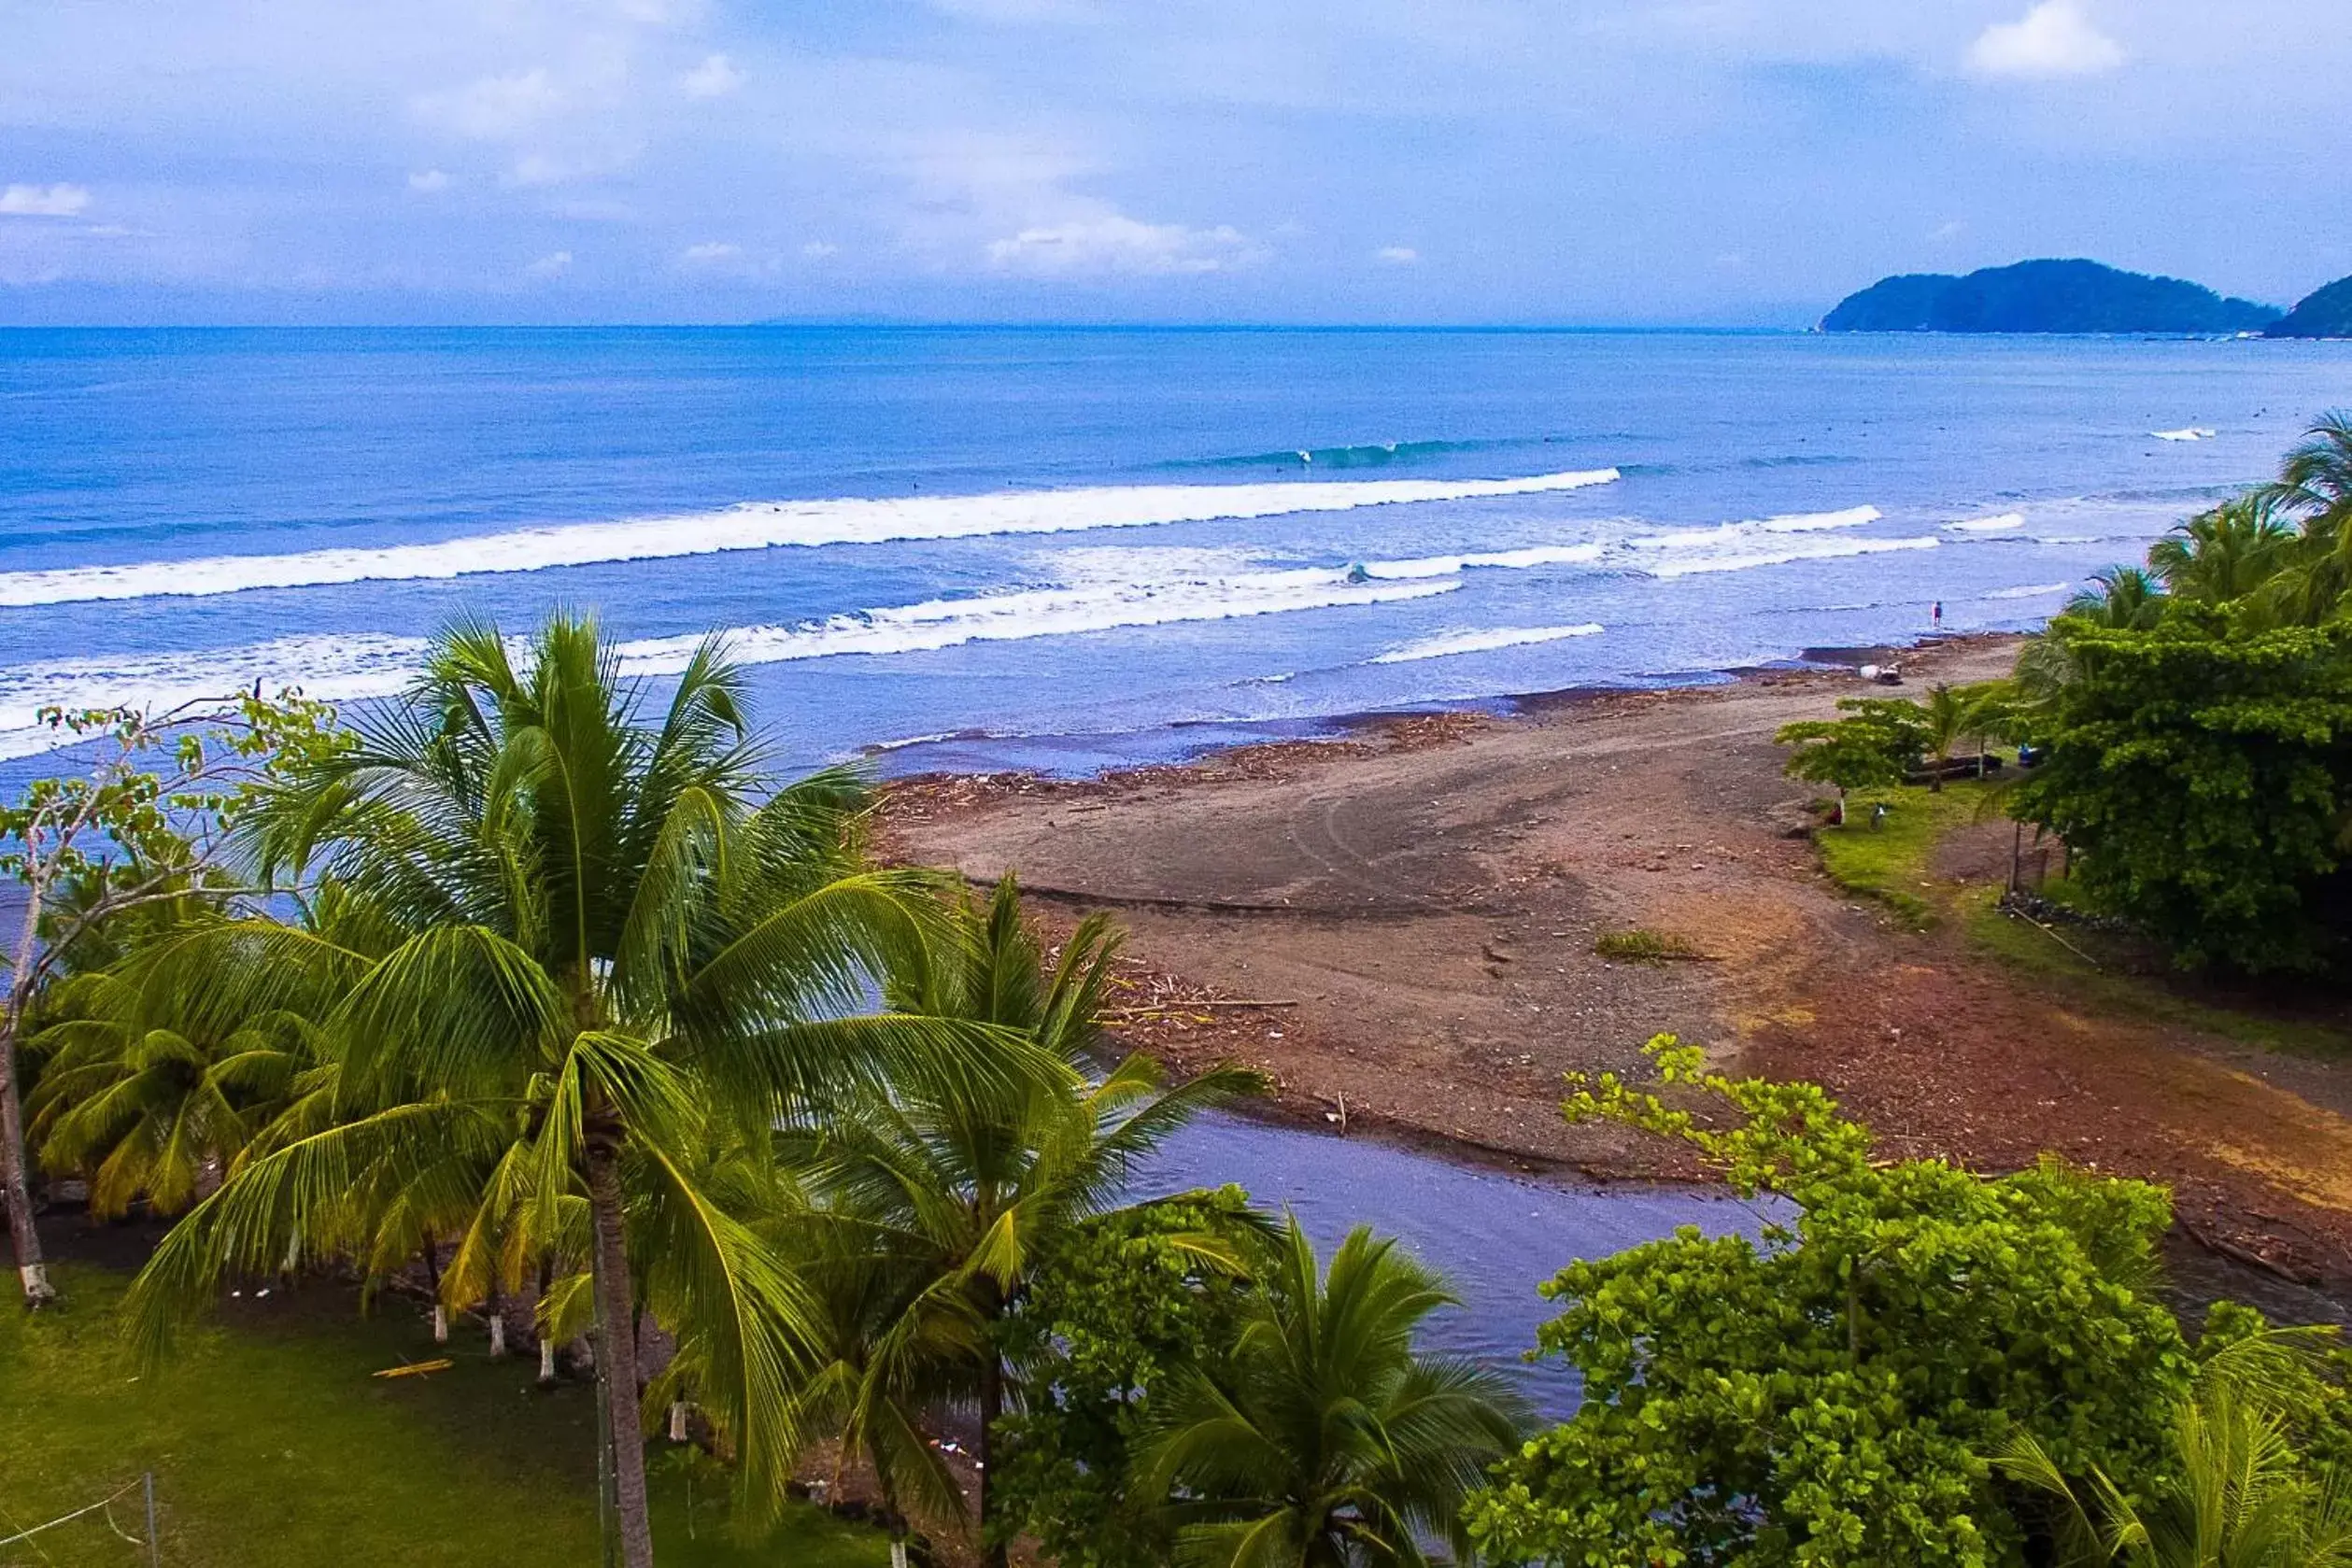 Beach in Costa Rica Surf Camp by SUPERbrand